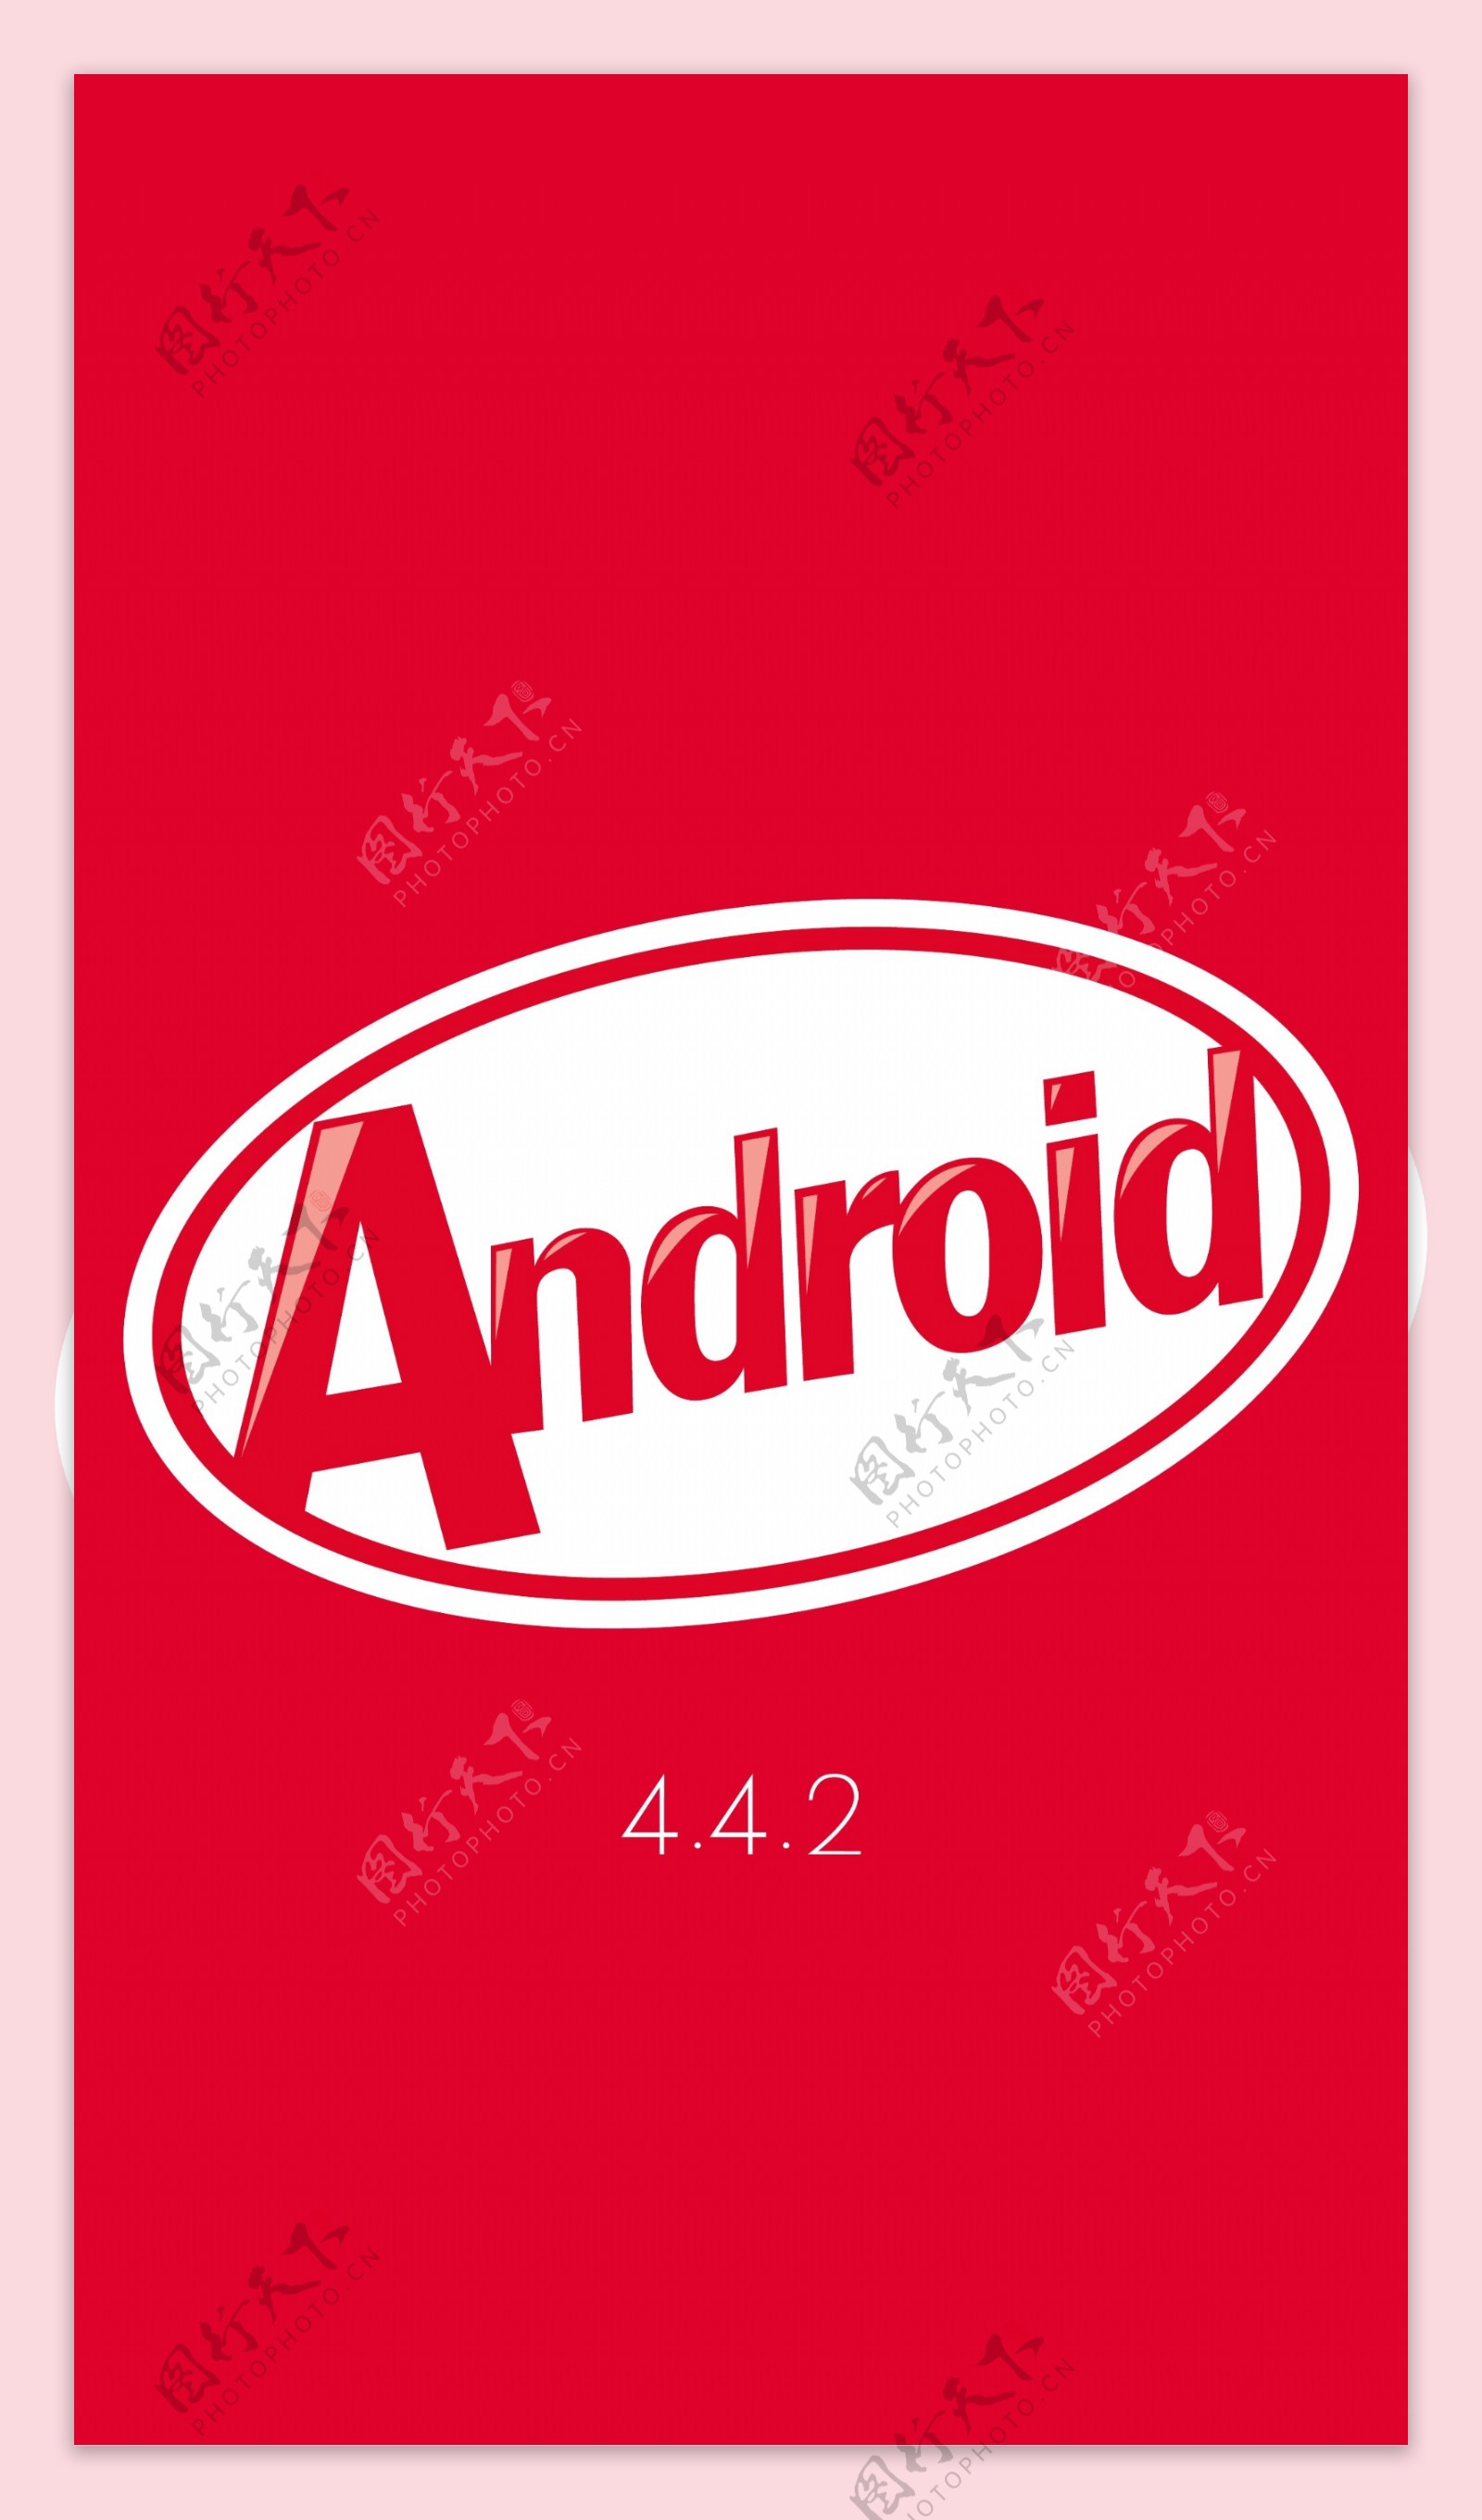 Android的红色背景矢量素材